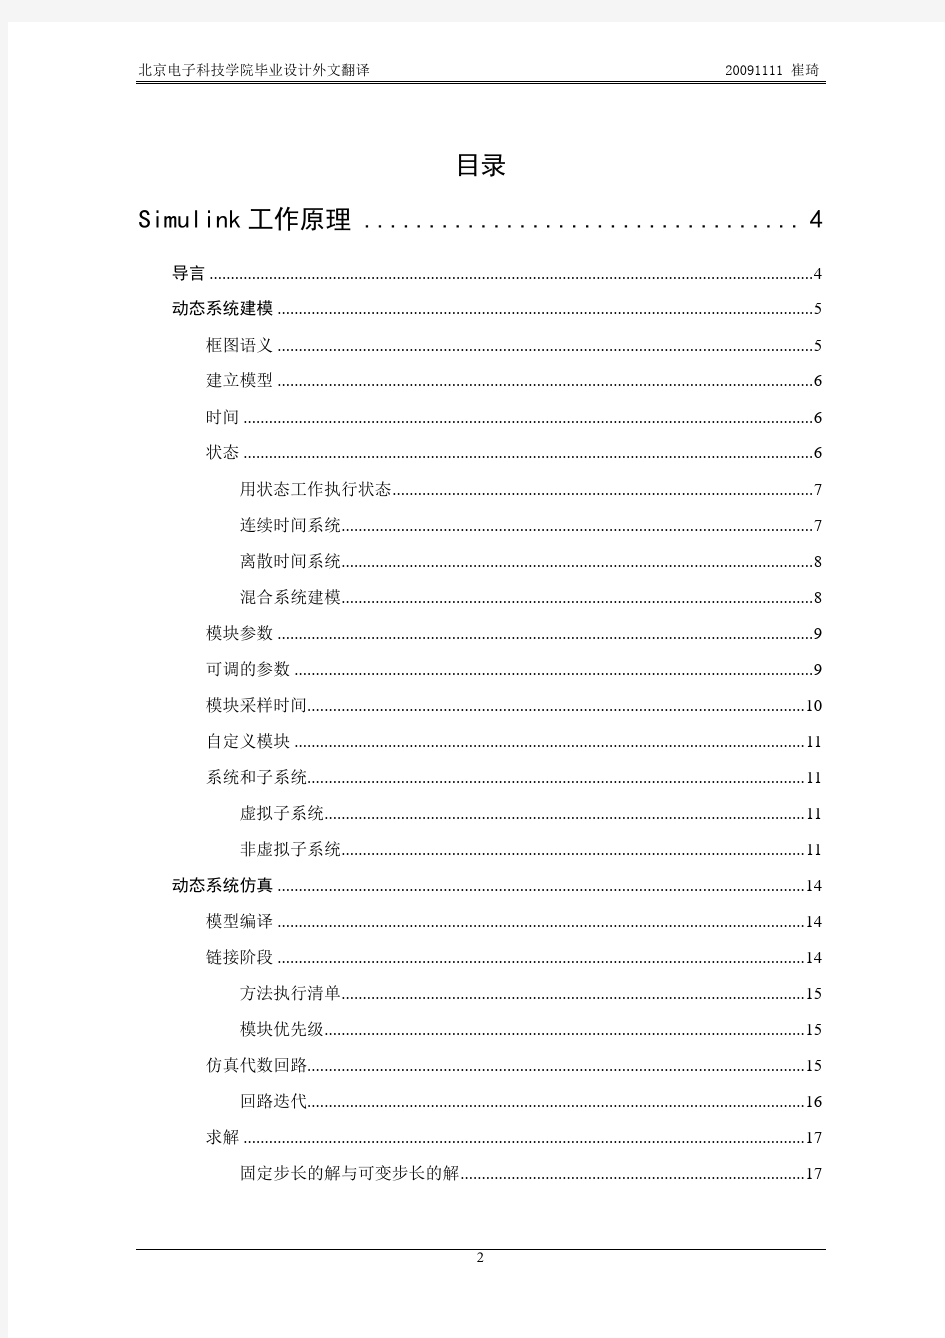 matlab-simulink中文帮助手册